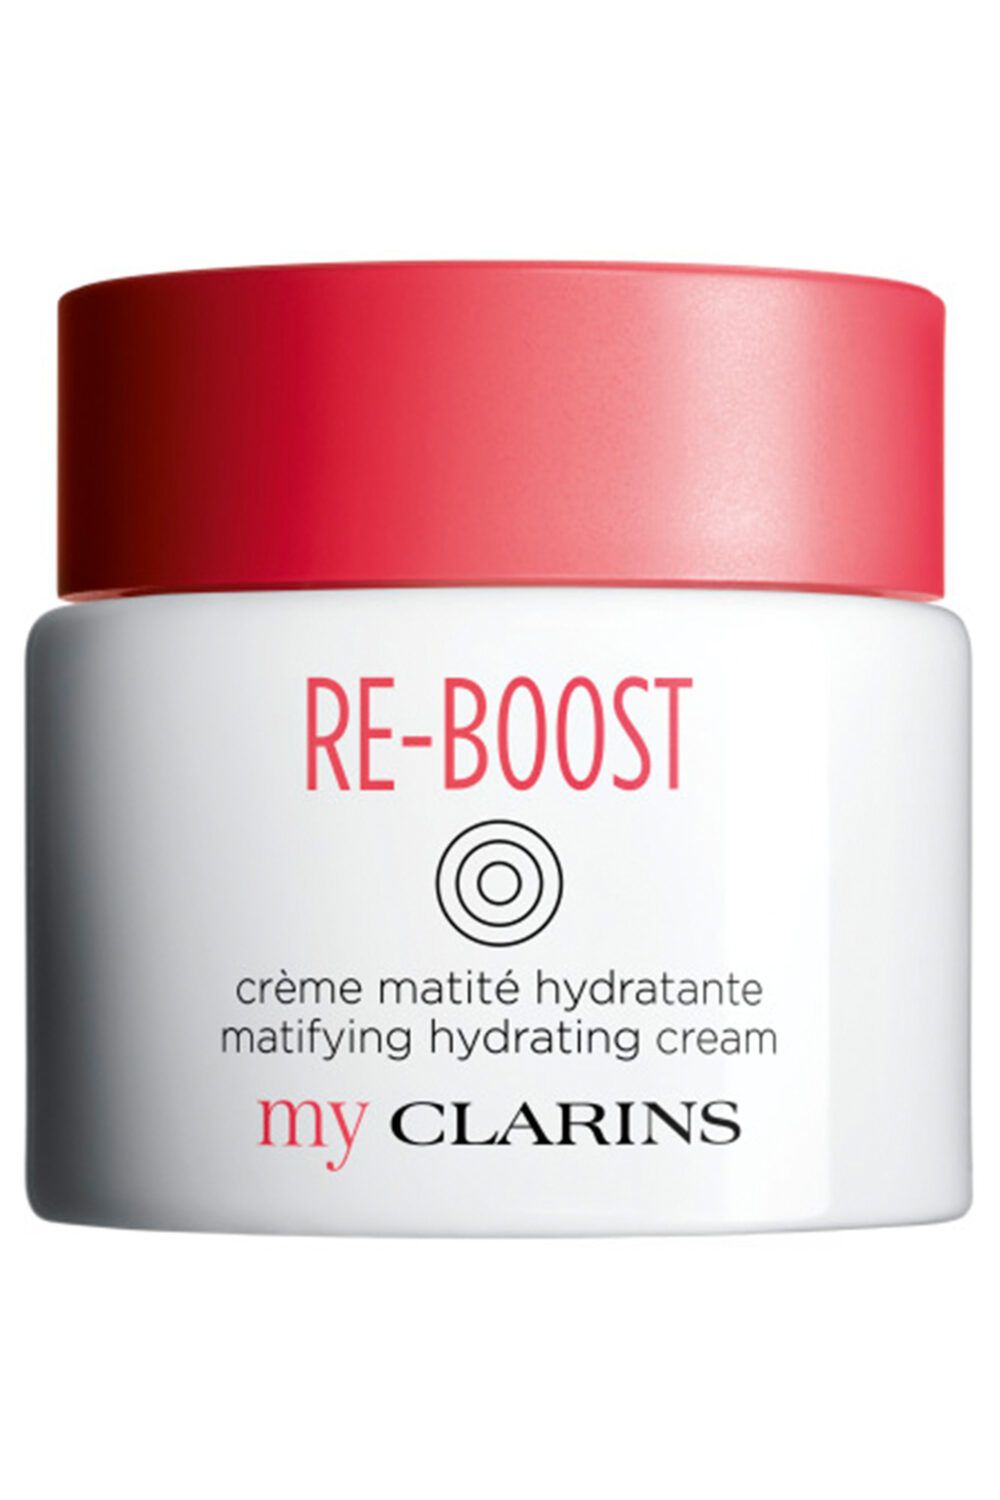 My Clarins - Crème matité hydratante RE-BOOST